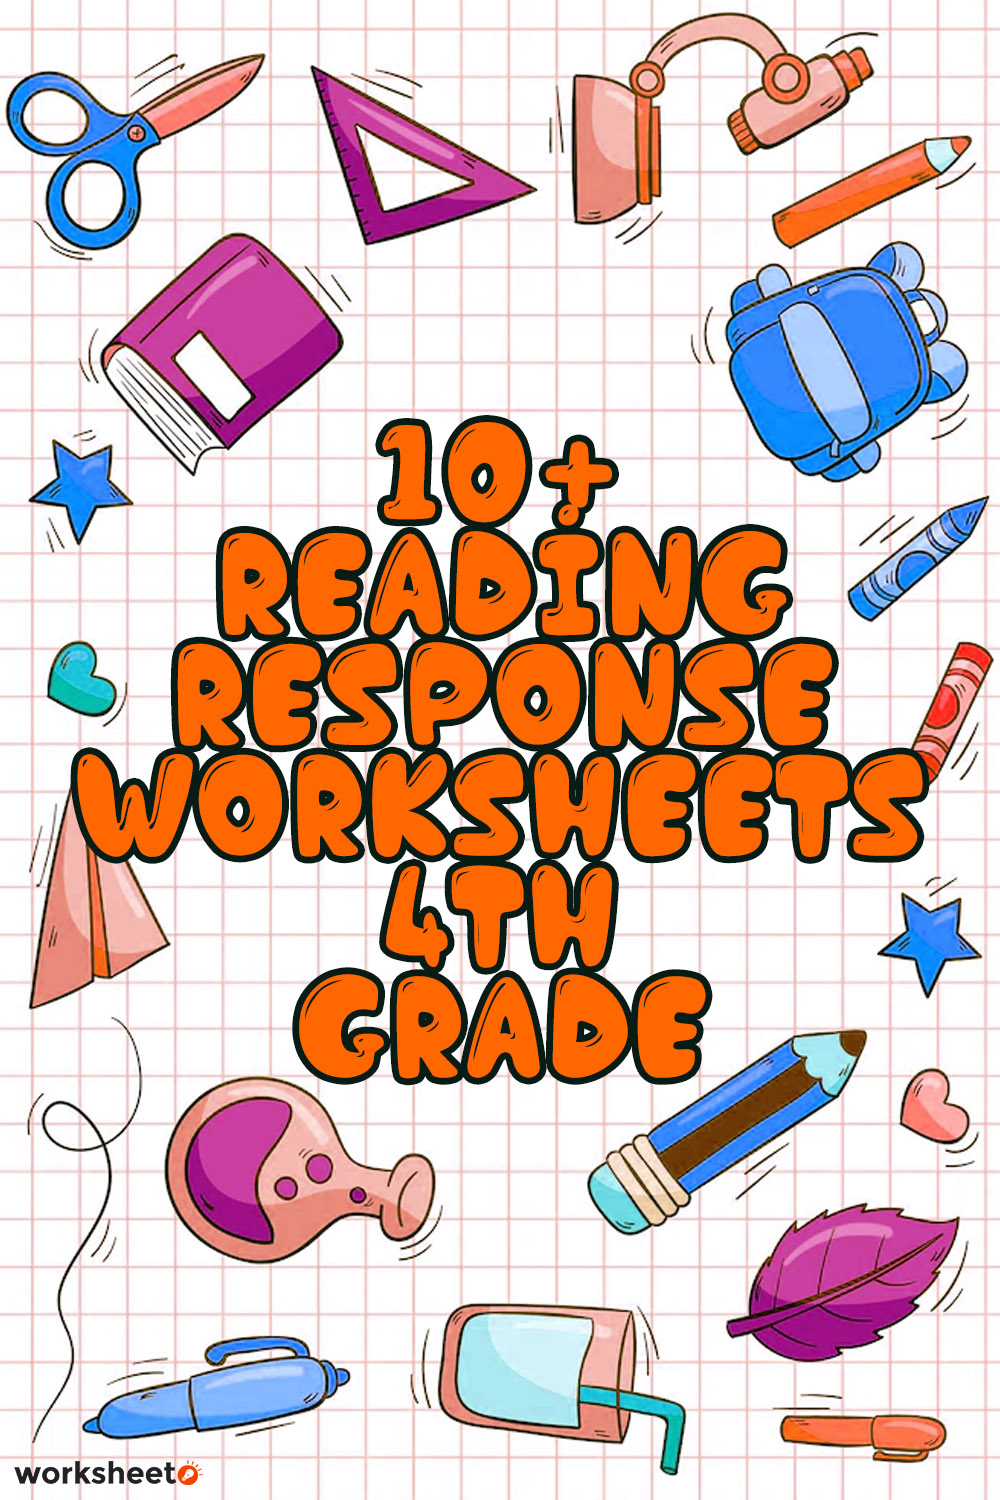 Reading Response Worksheets 4th Grade